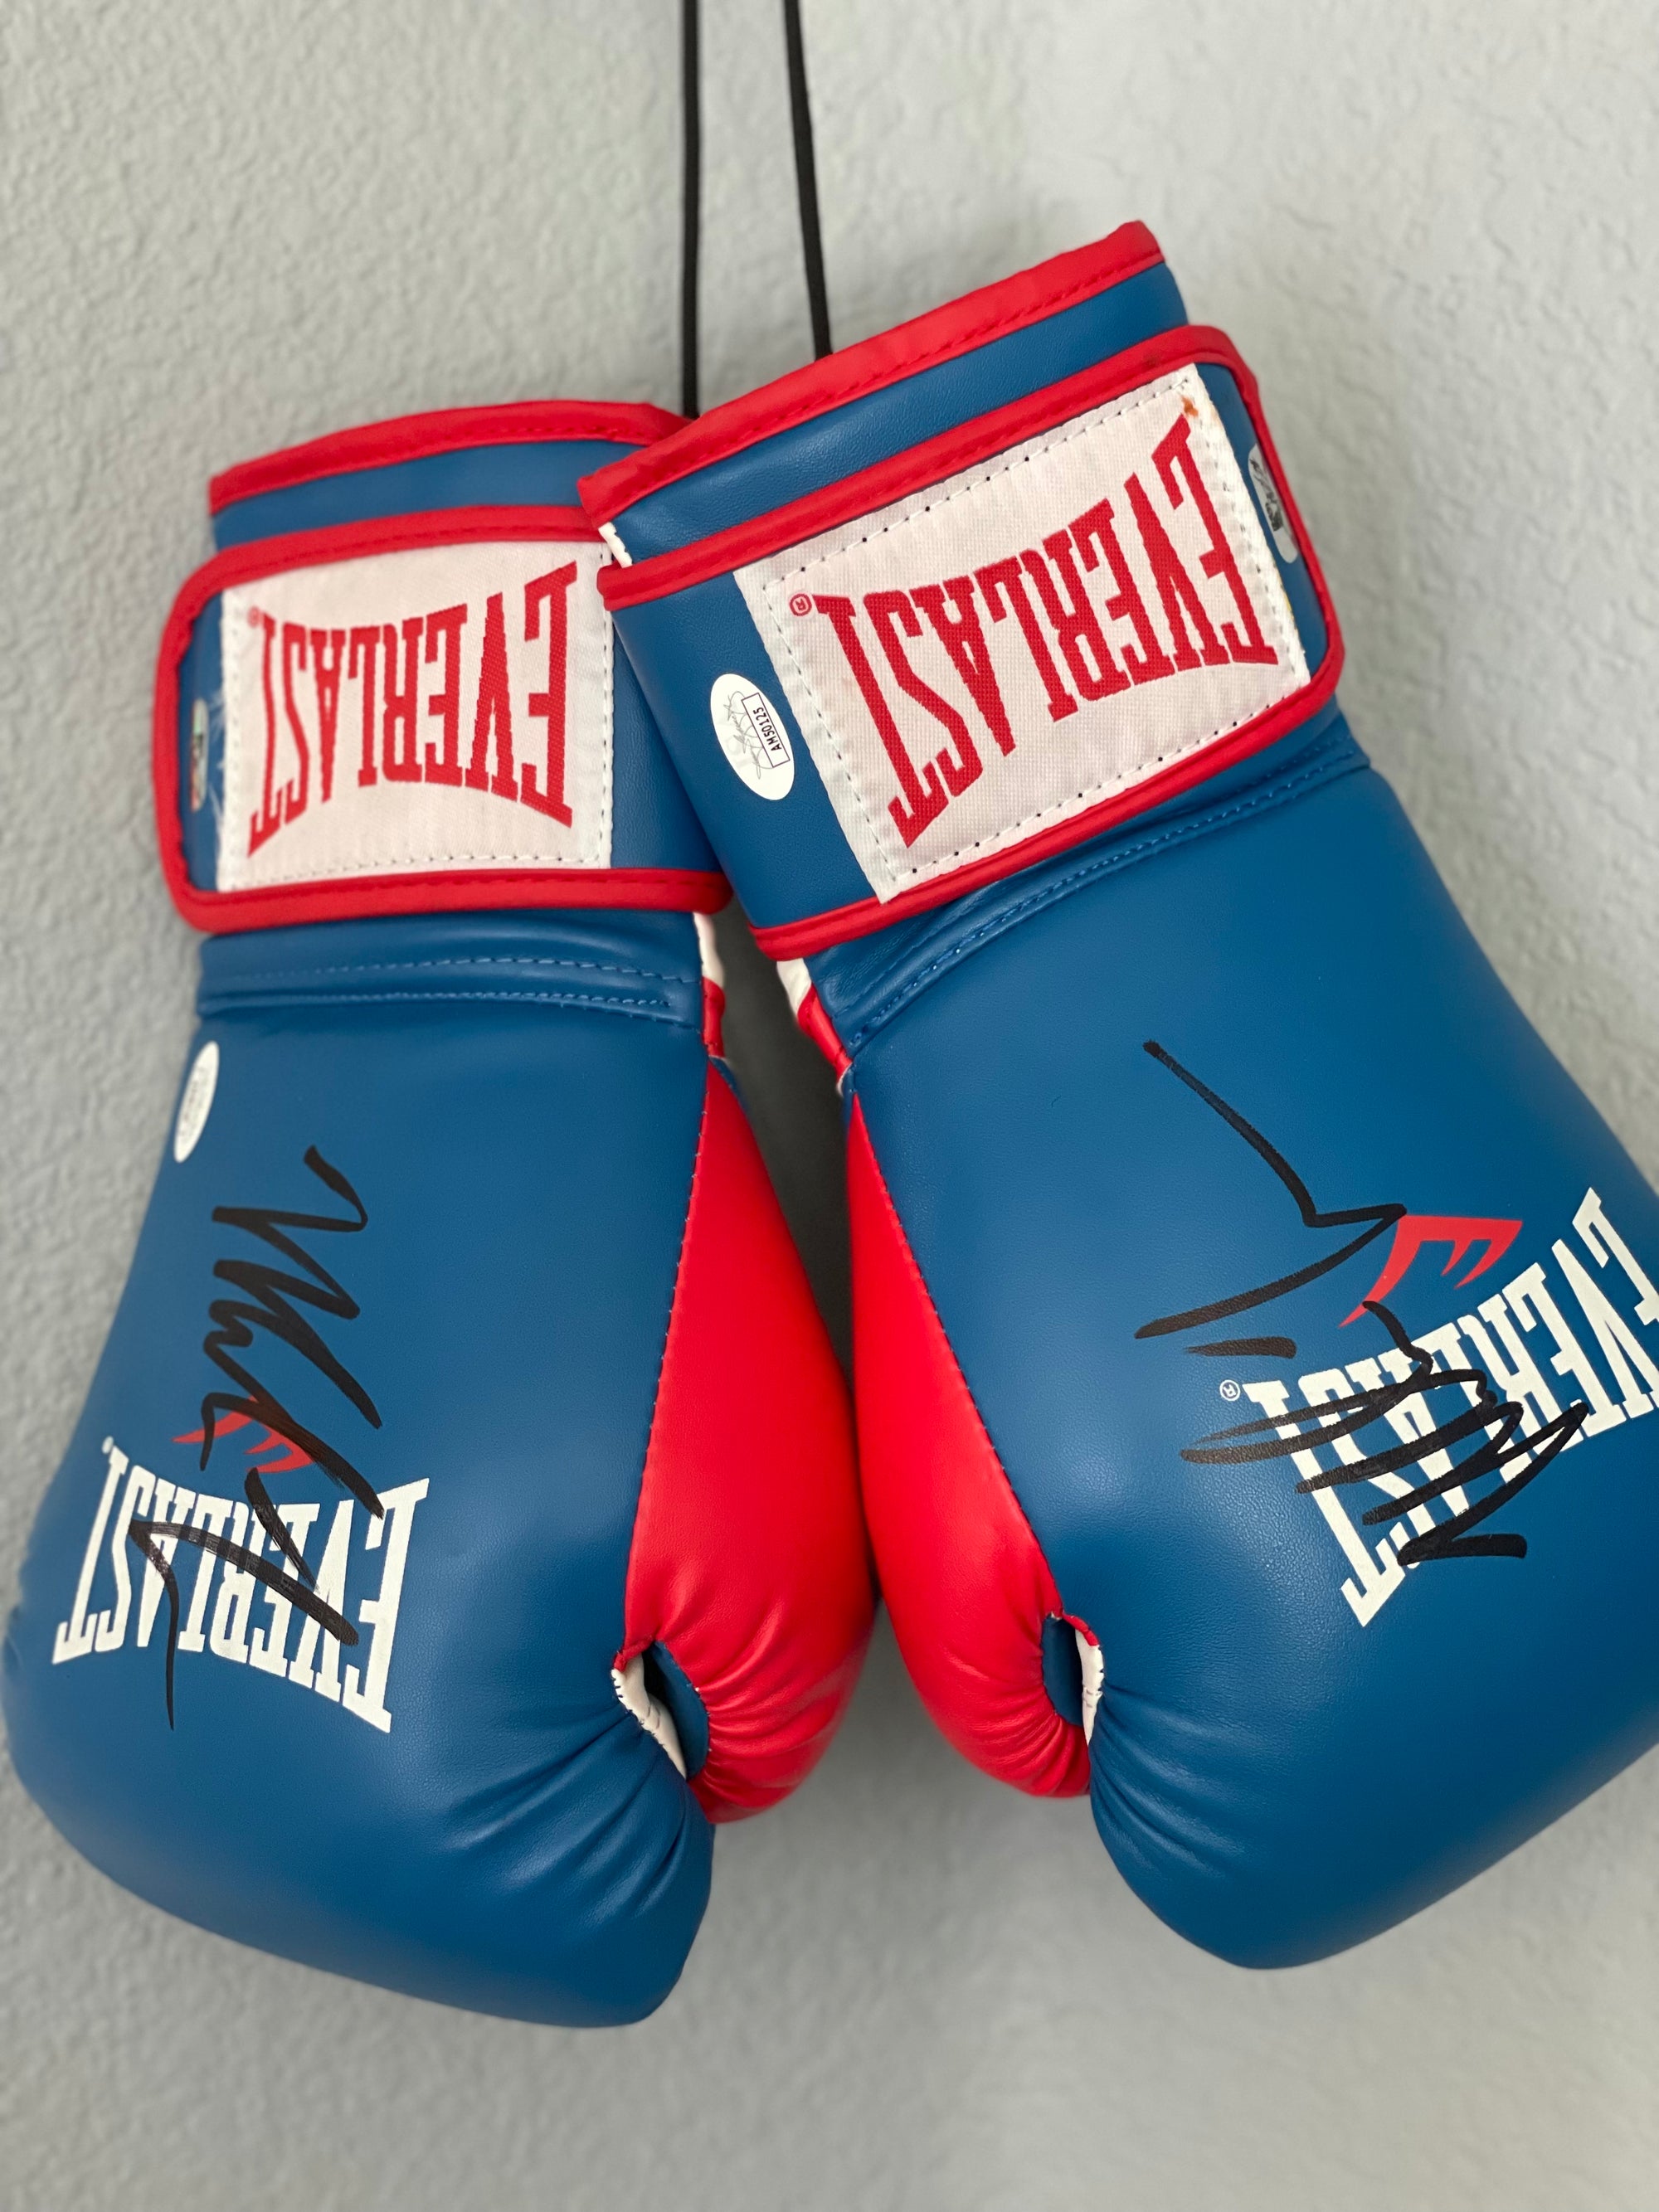 James 'Bonecrusher' Smith Signed Everlast Boxing Glove Inscribed